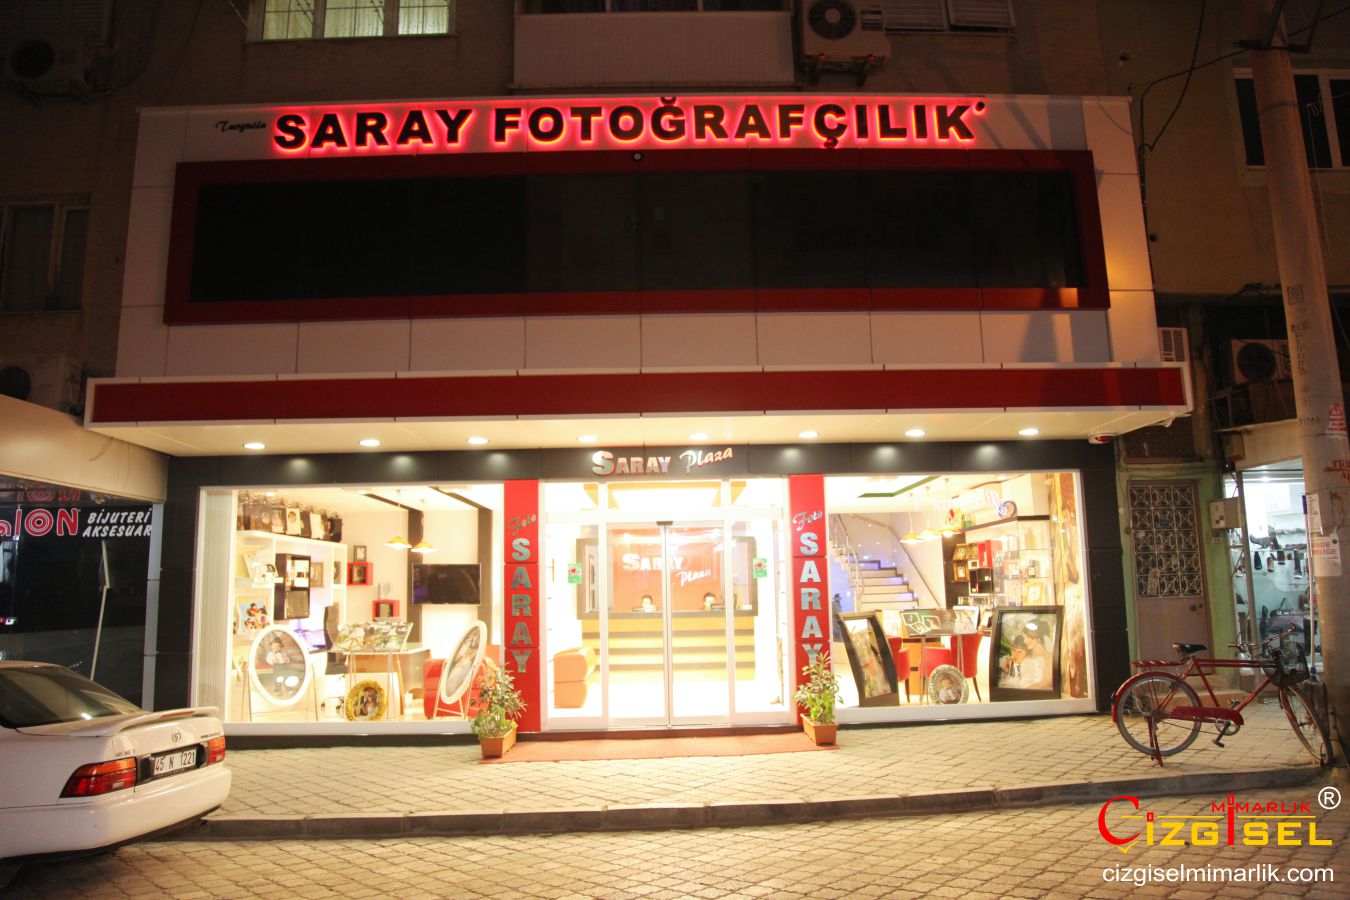 Saray Fotoraflk